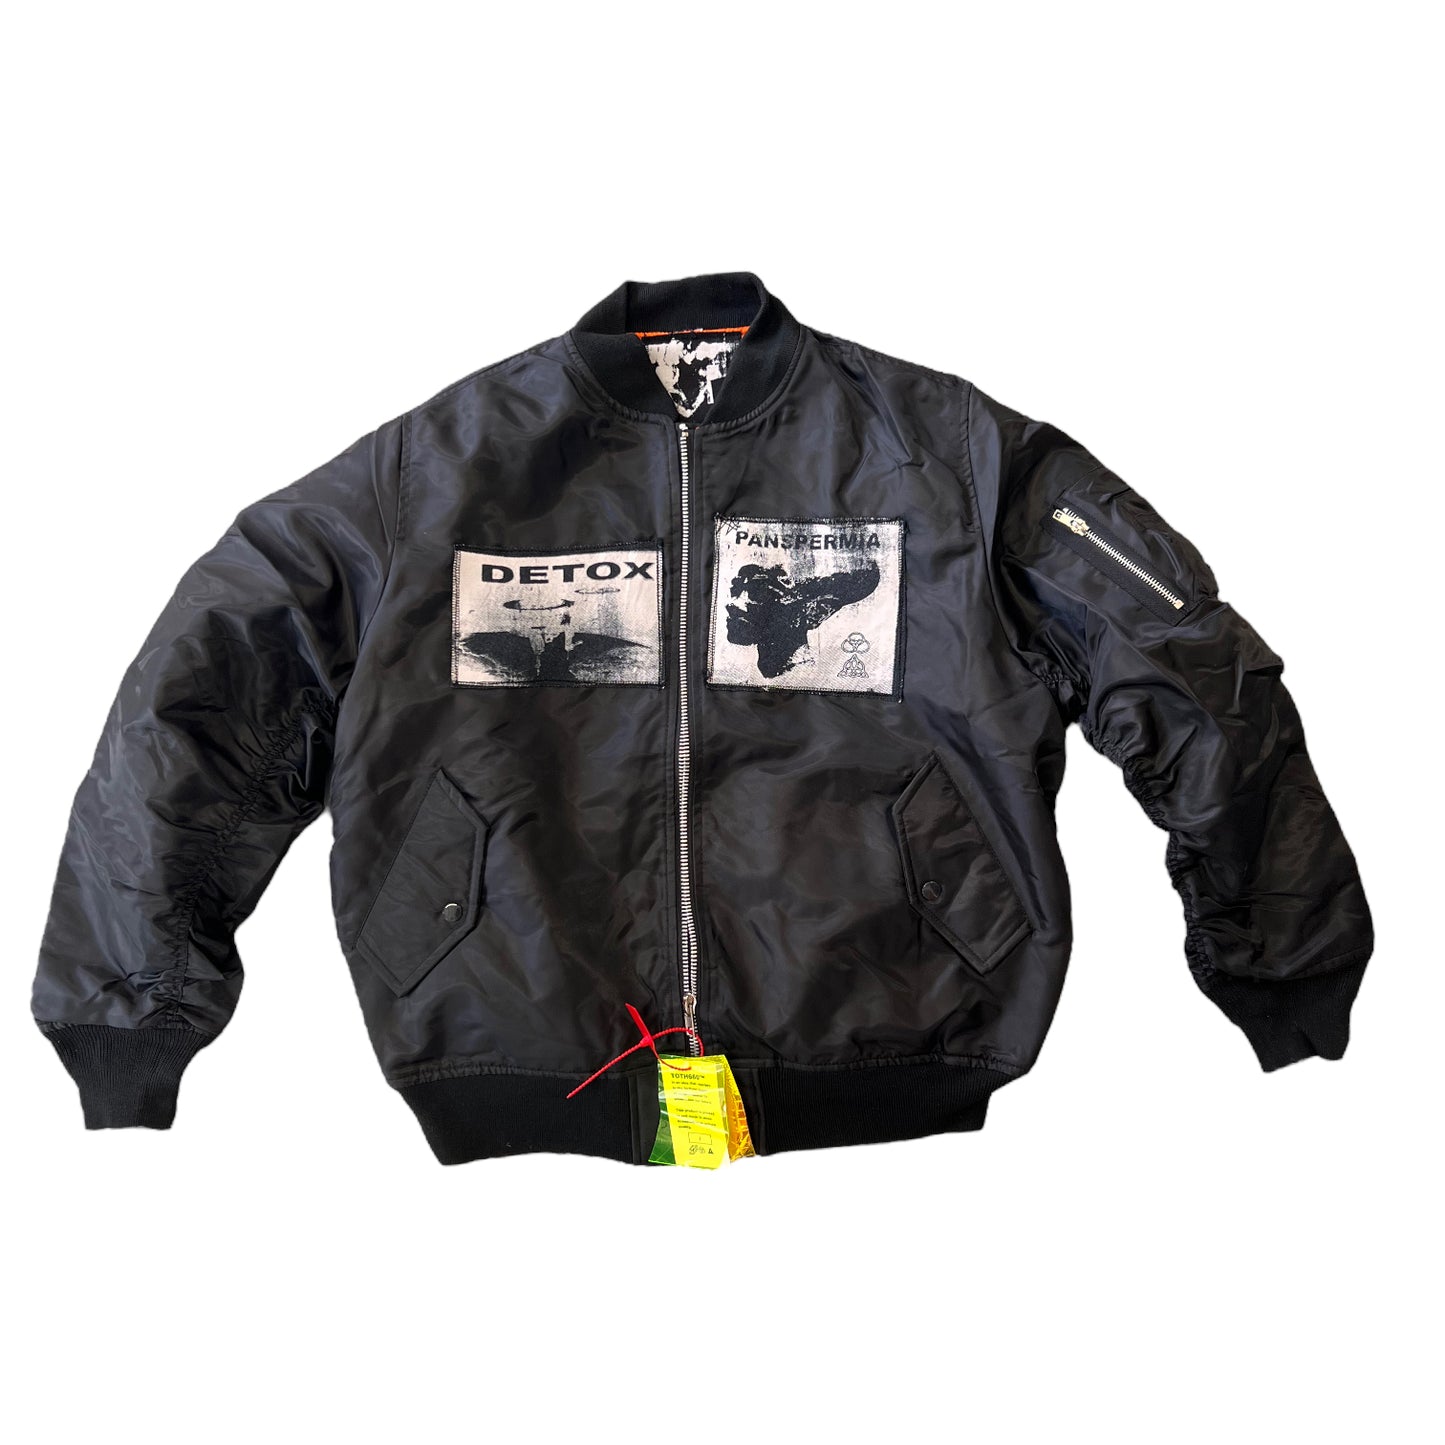 Toth 660 Detox bomber jacket